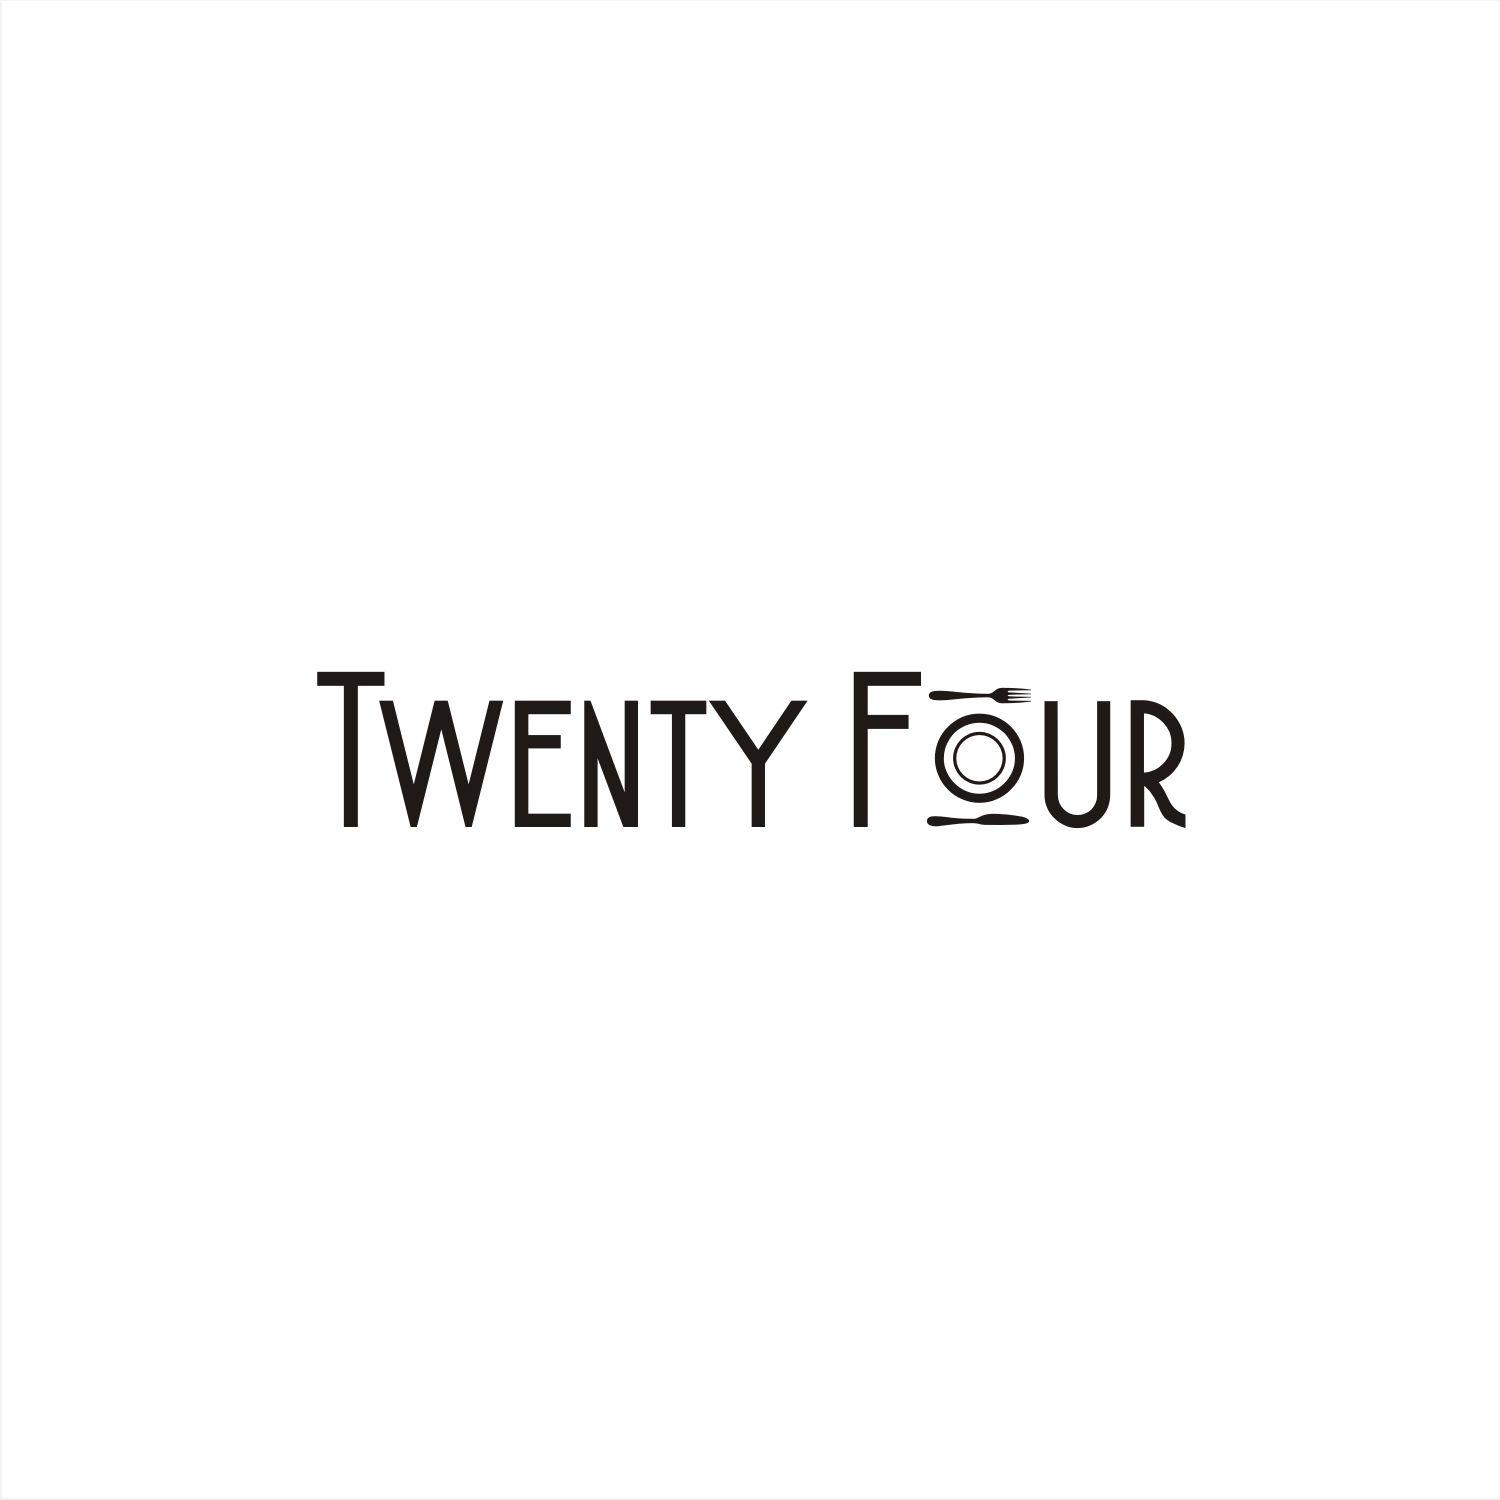 Twenty-Four Logo - Restaurant Logo Design for Twenty Four by yulioantoni's. Design